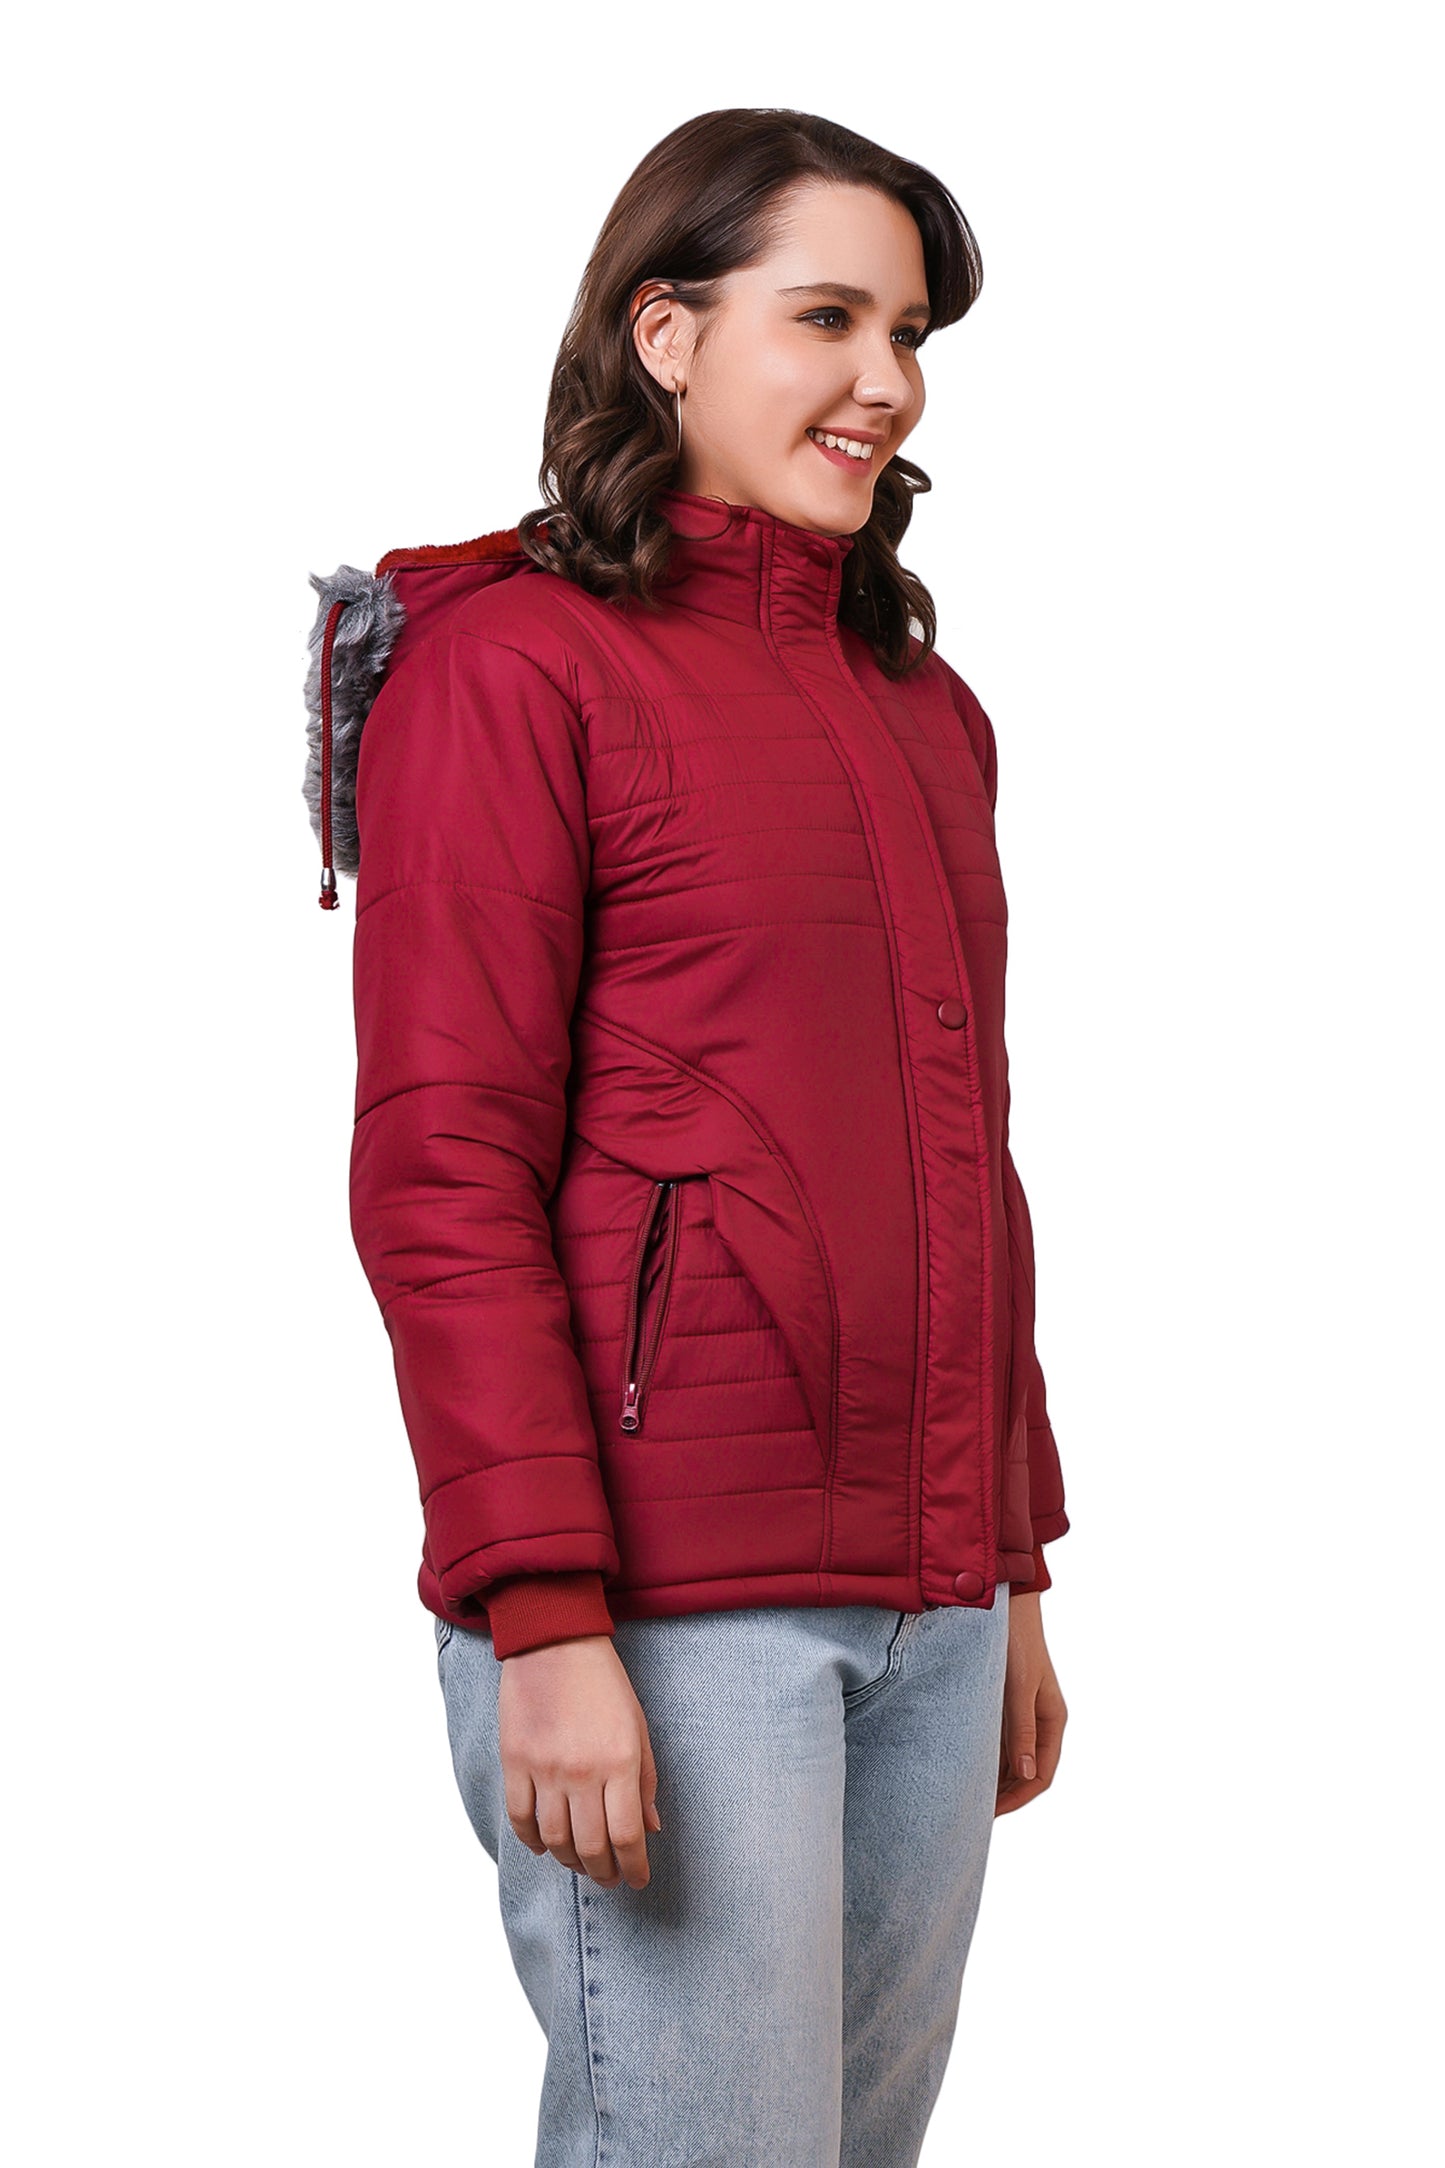 NUEVOSDAMAS Women Solid Maroon Full Sleeve Puffer Jacket With Detachable Hood